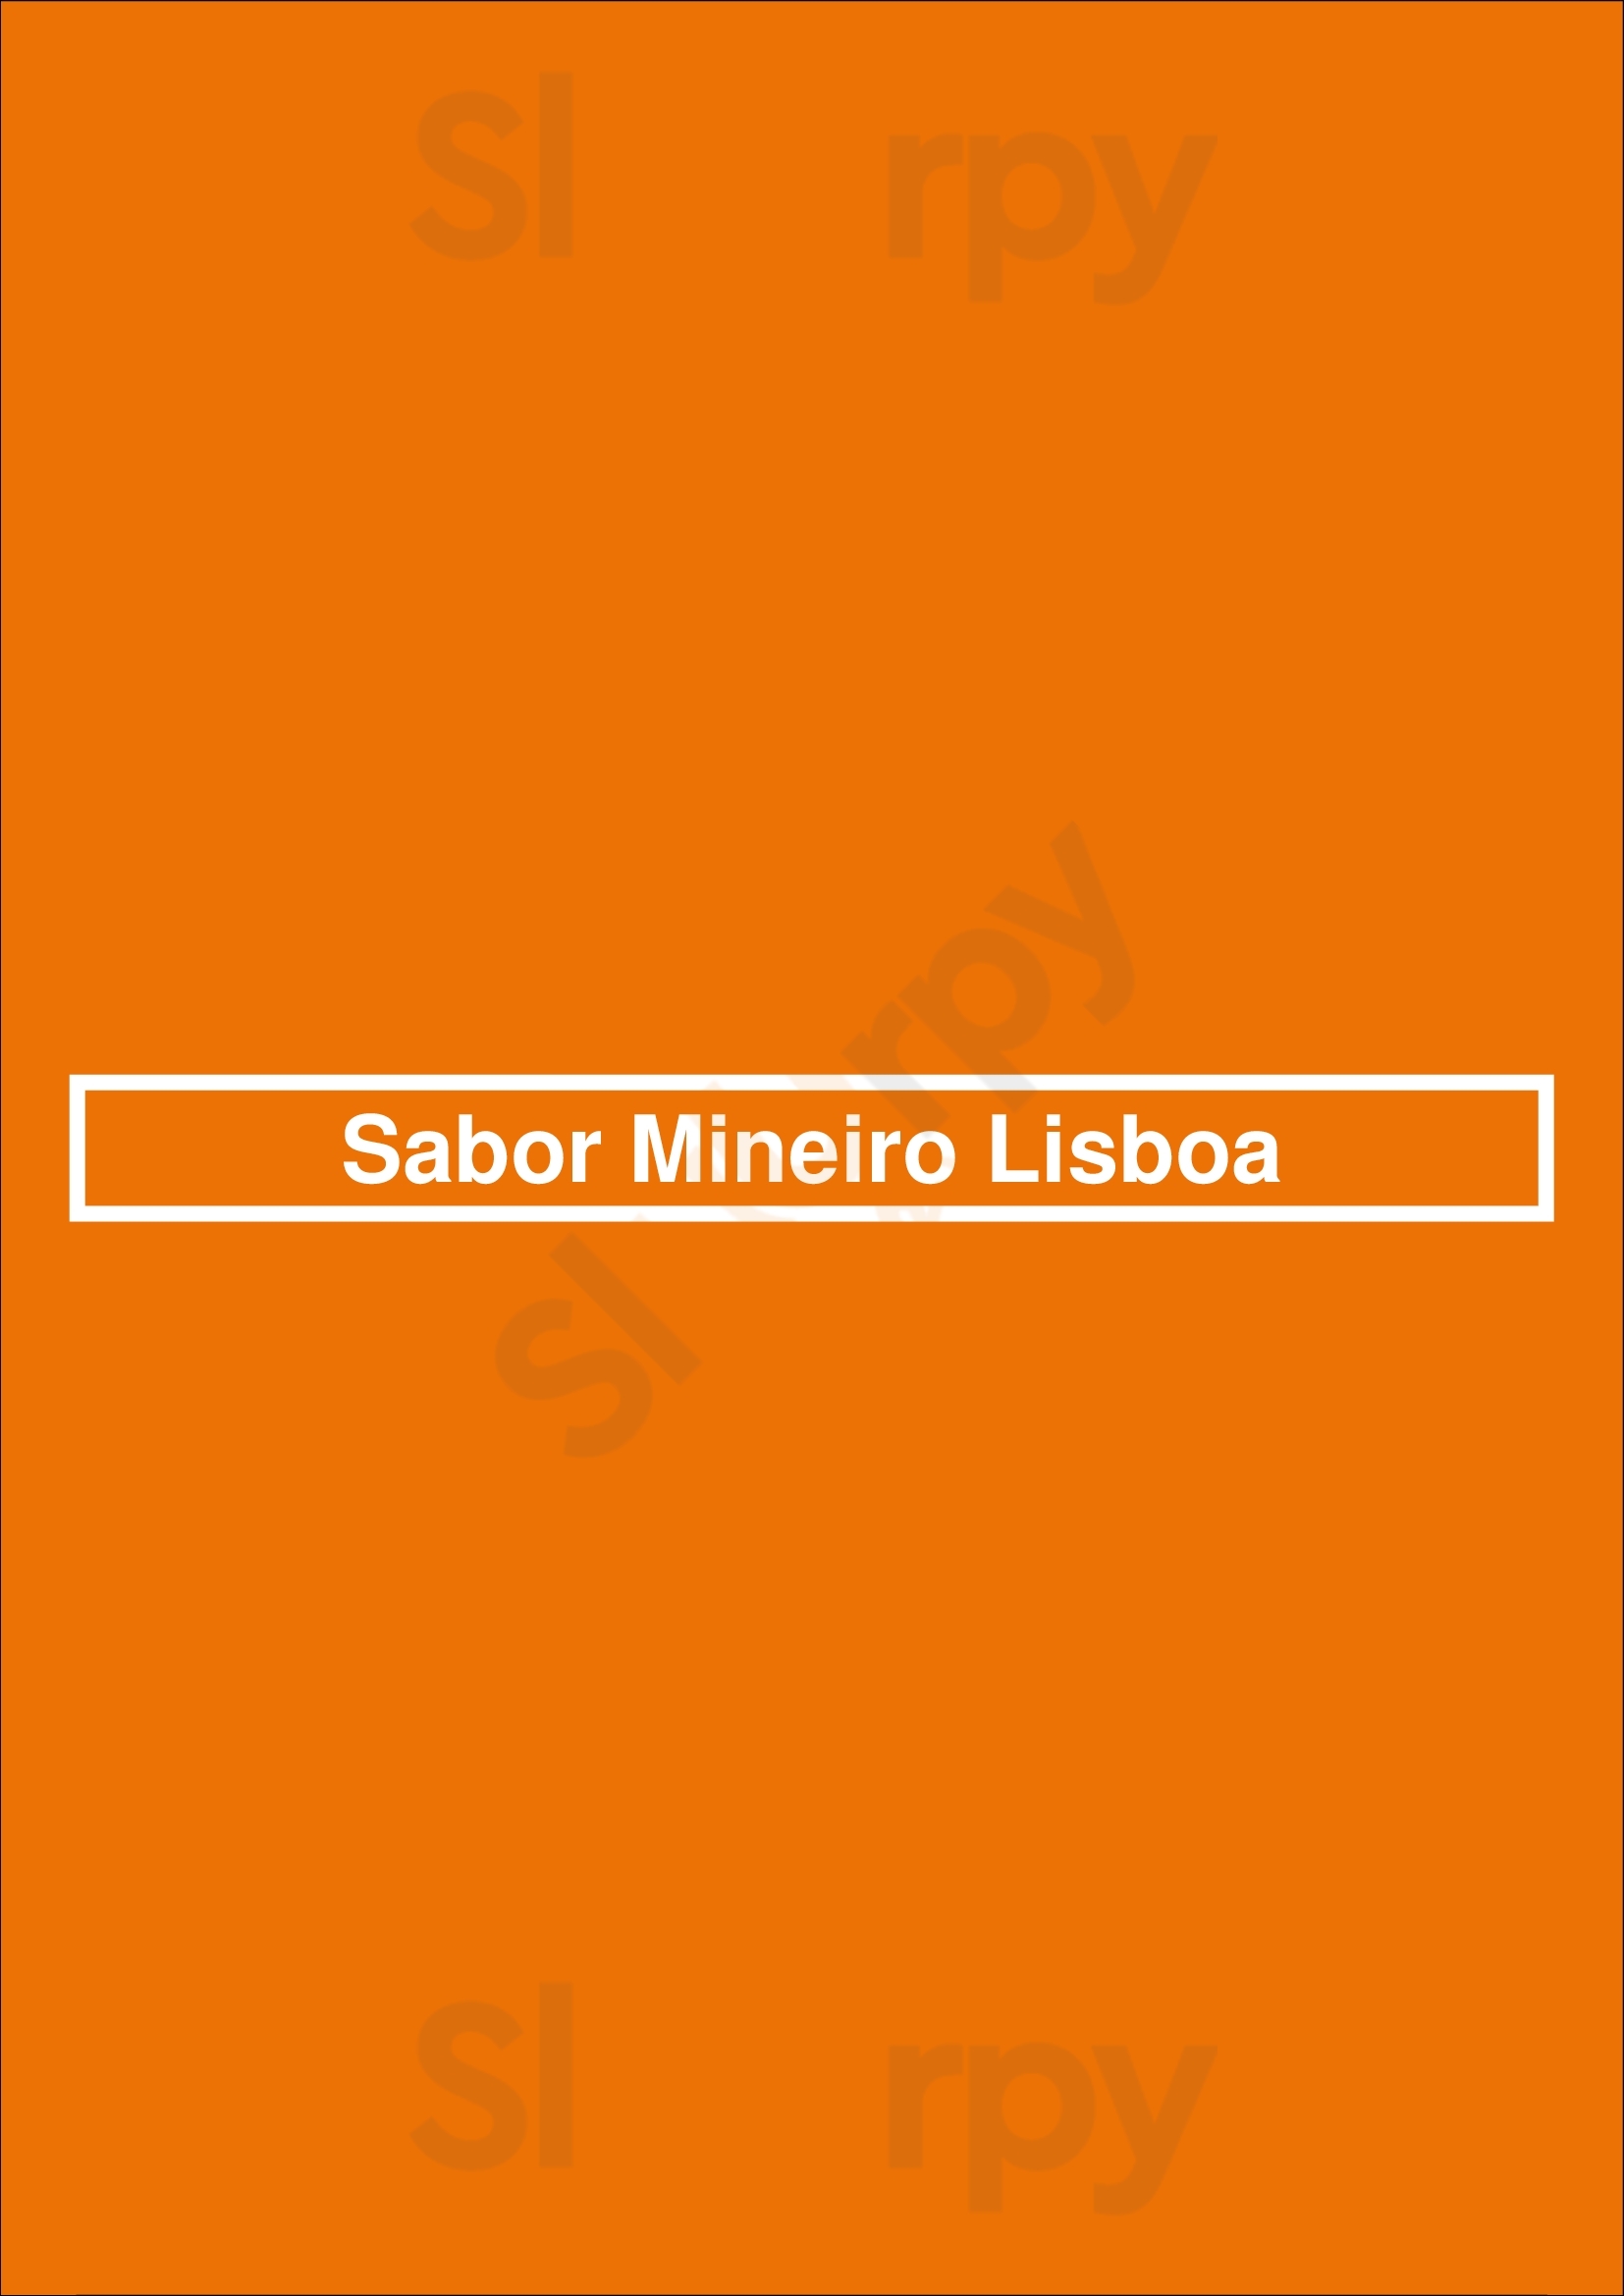 Sabor Mineiro Lisboa Lisboa Menu - 1